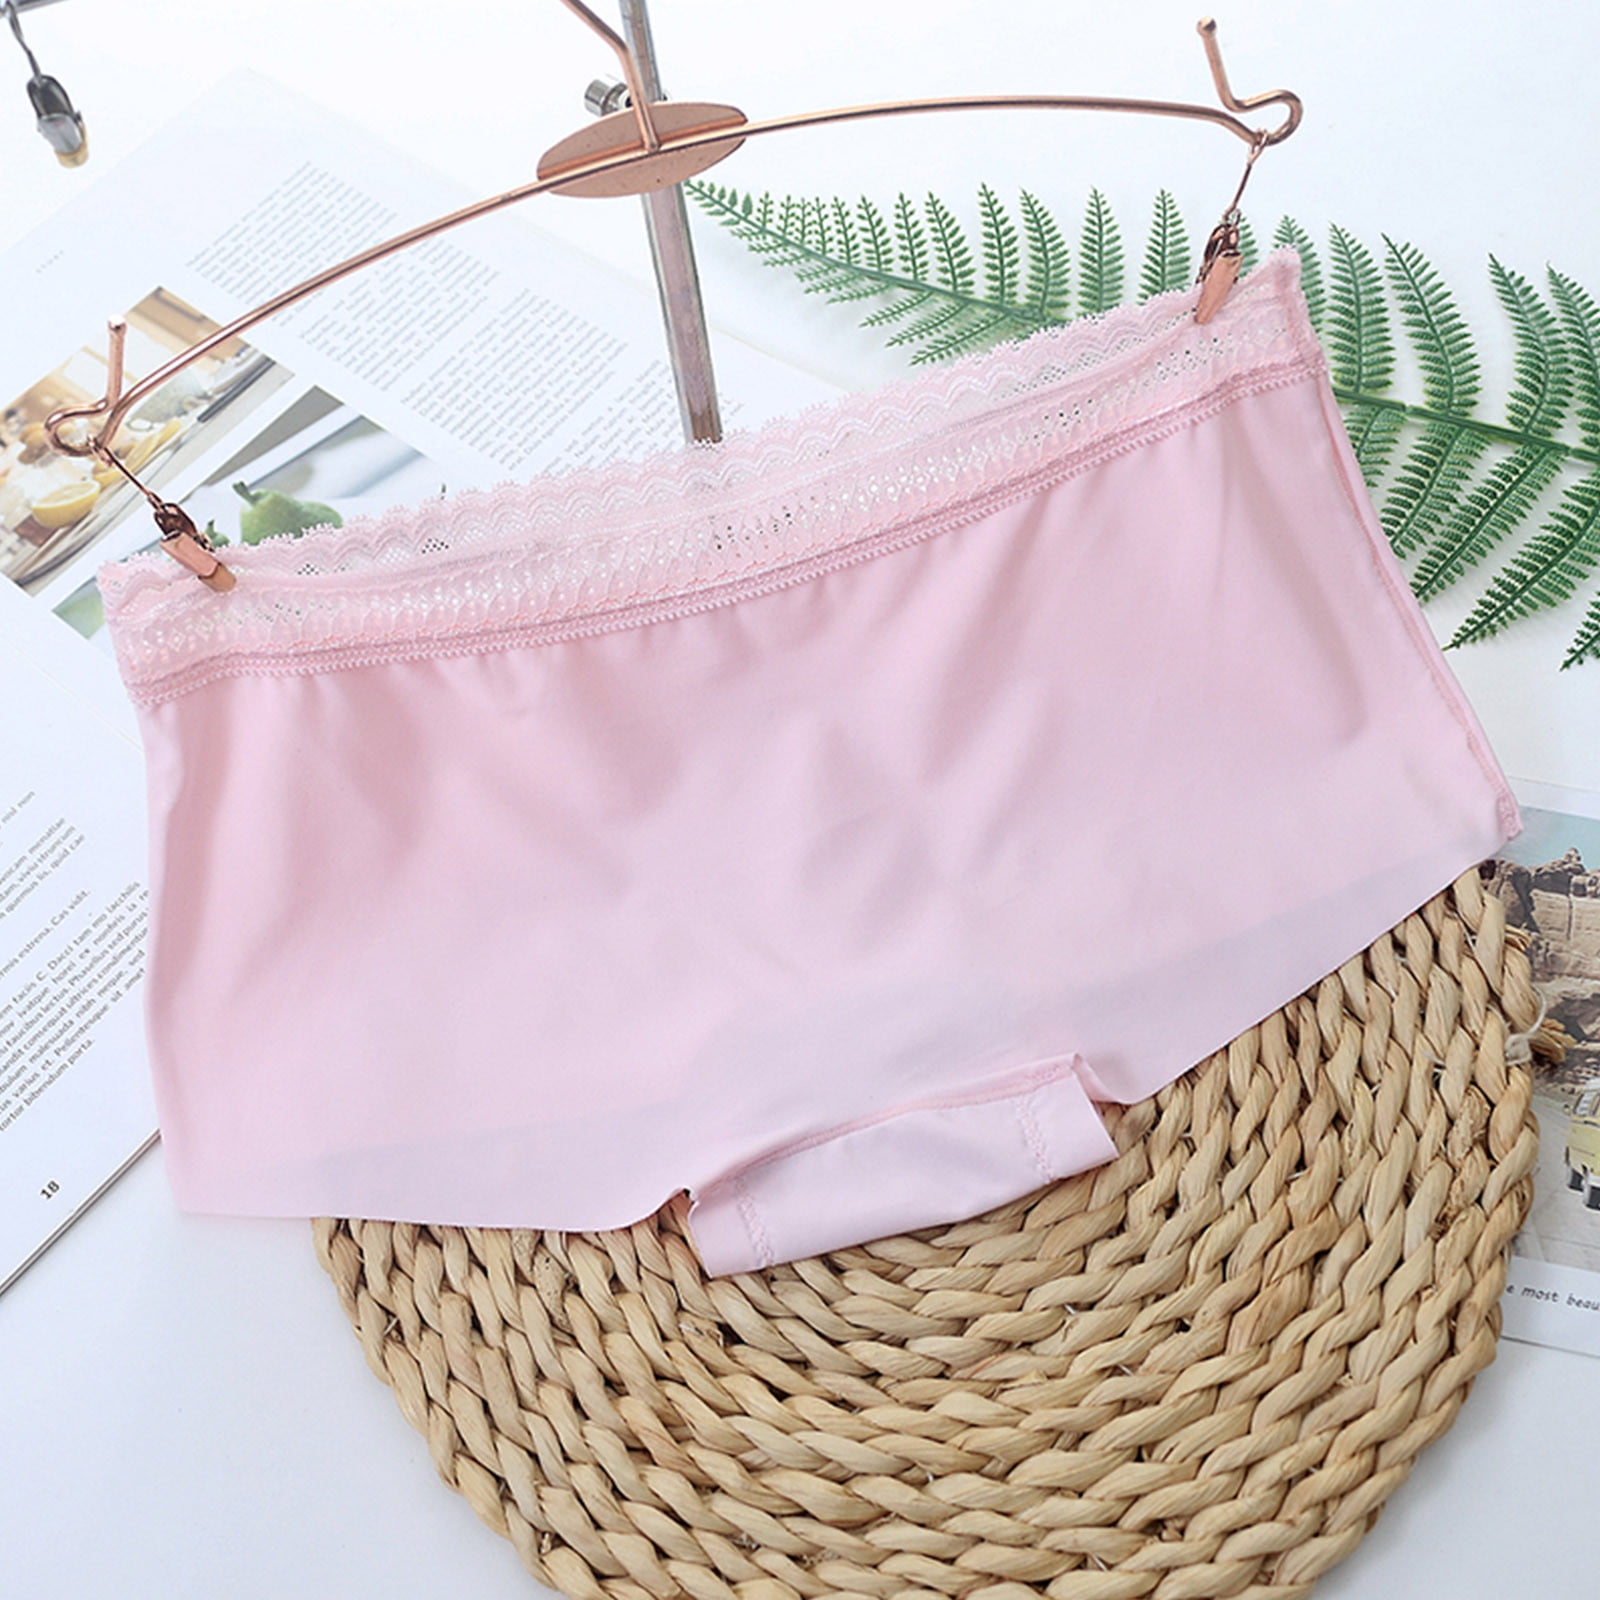 zuwimk Cotton Thongs For Women,Women's Pure Stretch Thong Underwear Hot  Pink,One Size